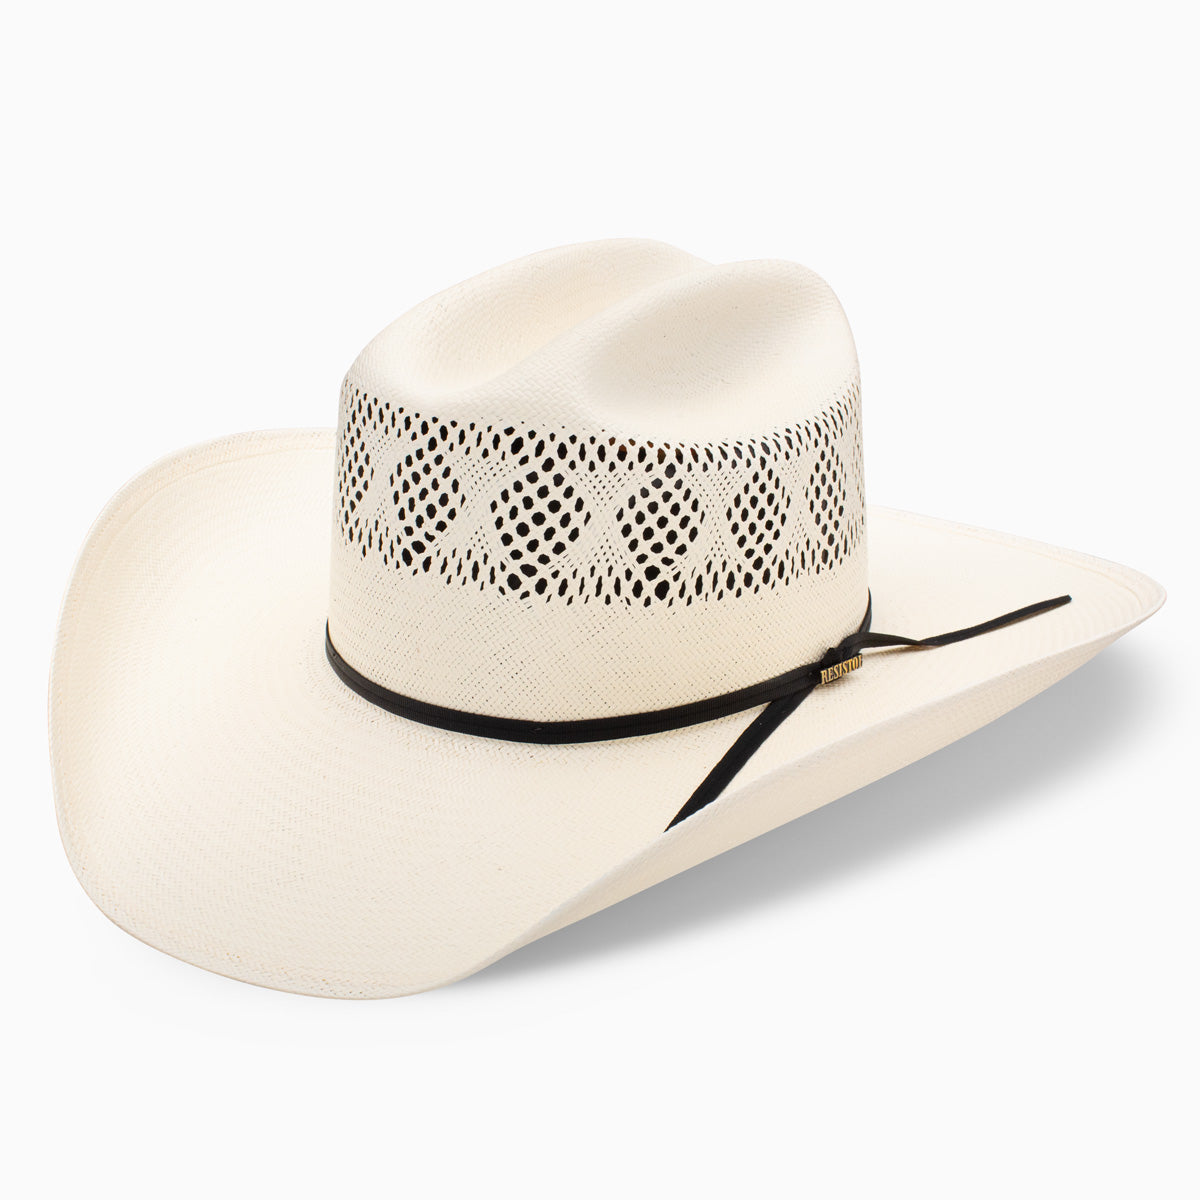 Boho-Inspired Straw Cowboy Hat